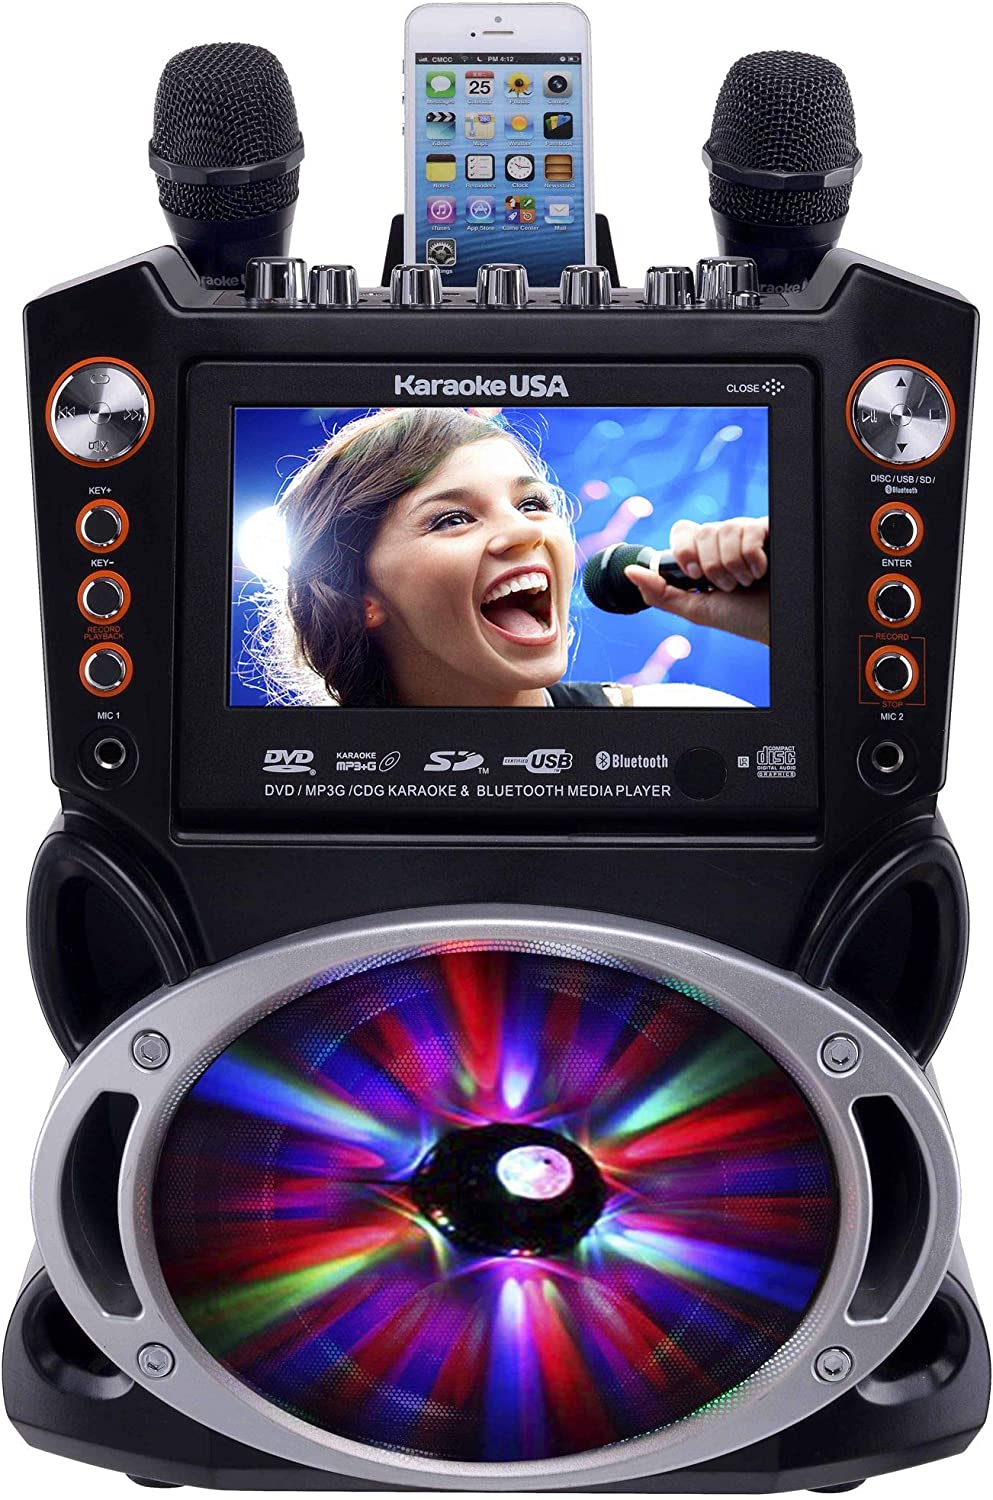 Karaoke USA LCD Synchronizing Lights Karaoke Machine